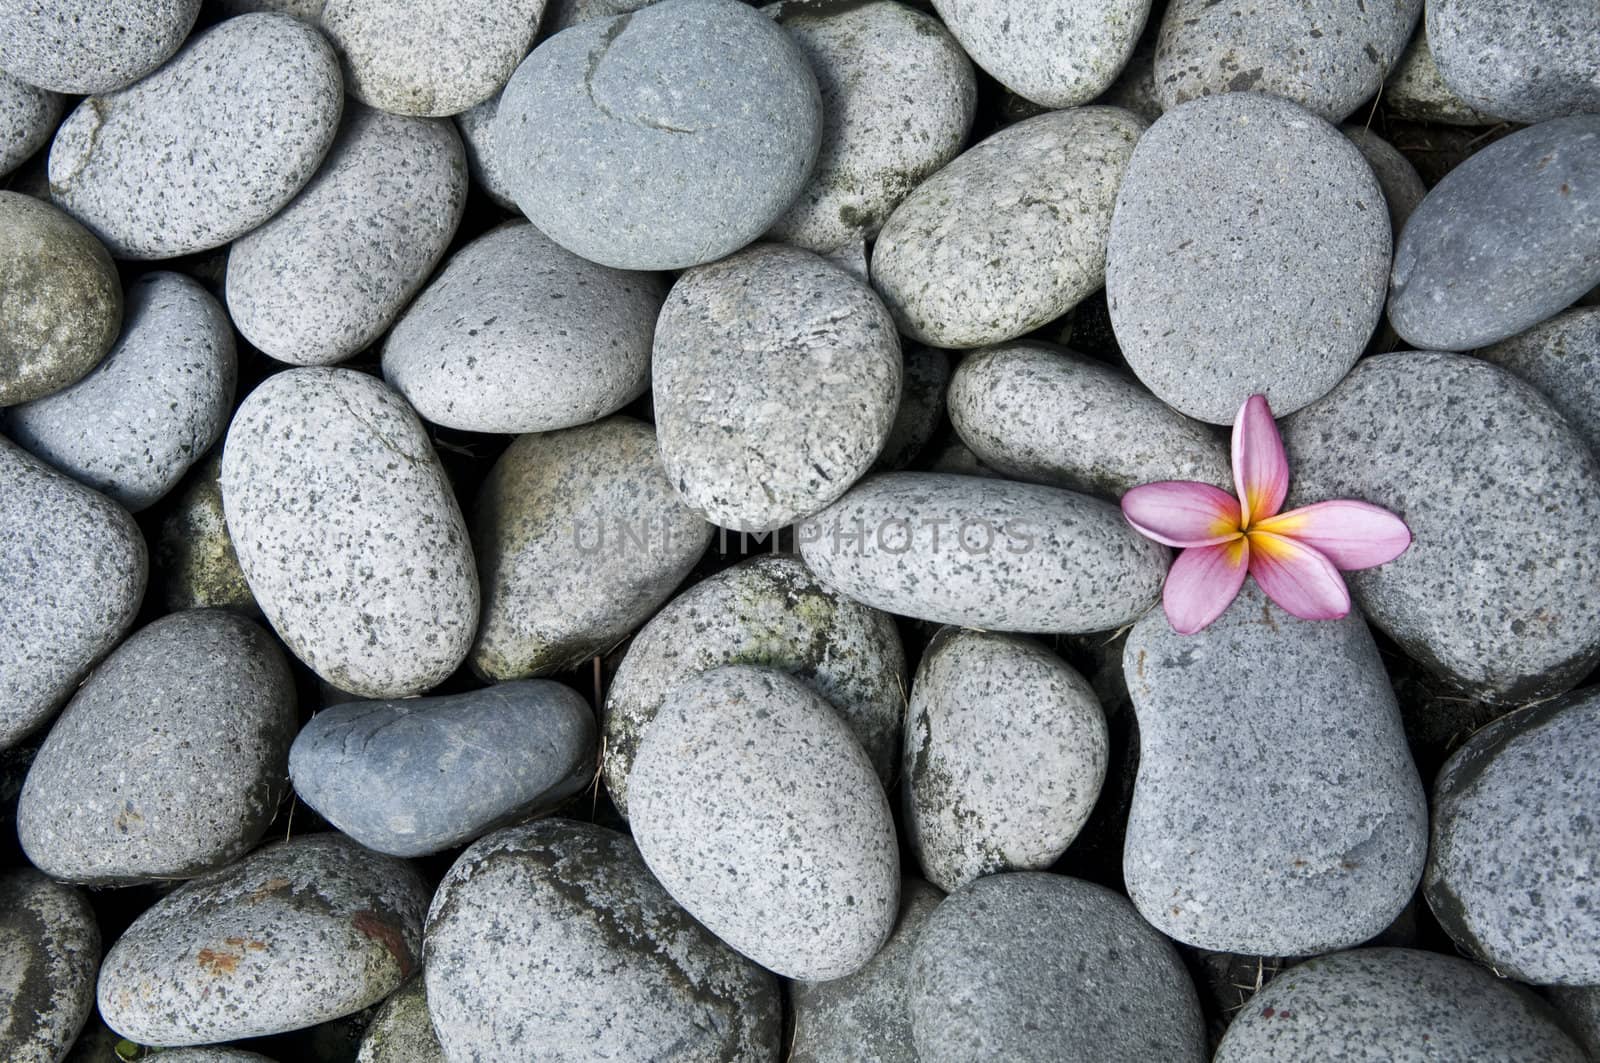 frangipani flower on a bunch of rocks